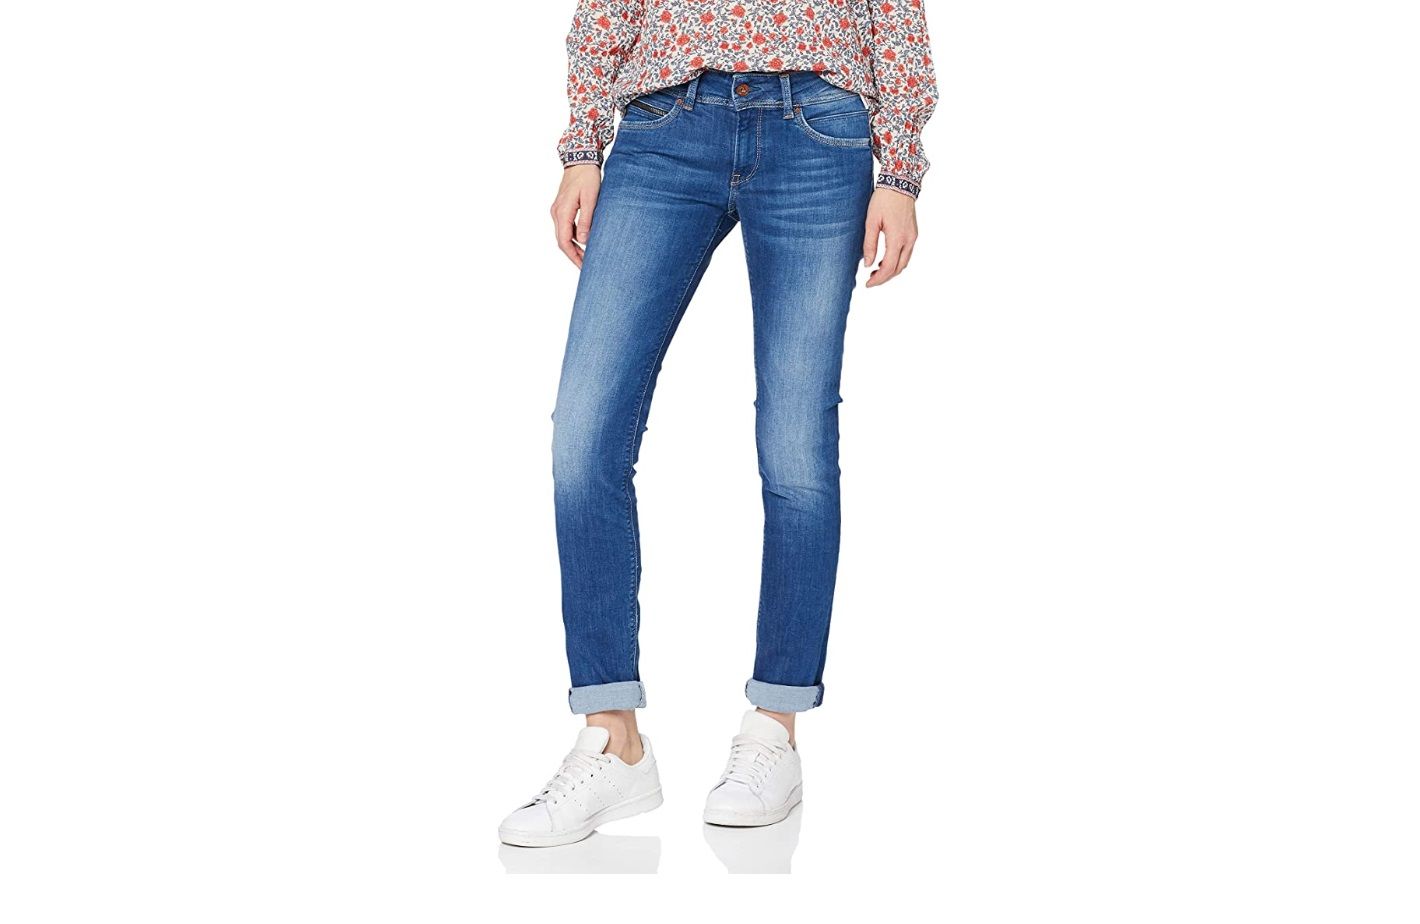 ¡Chollo! Pantalones Pepe Jeans New Brooke por sólo 33,99€ (antes 52,99€)